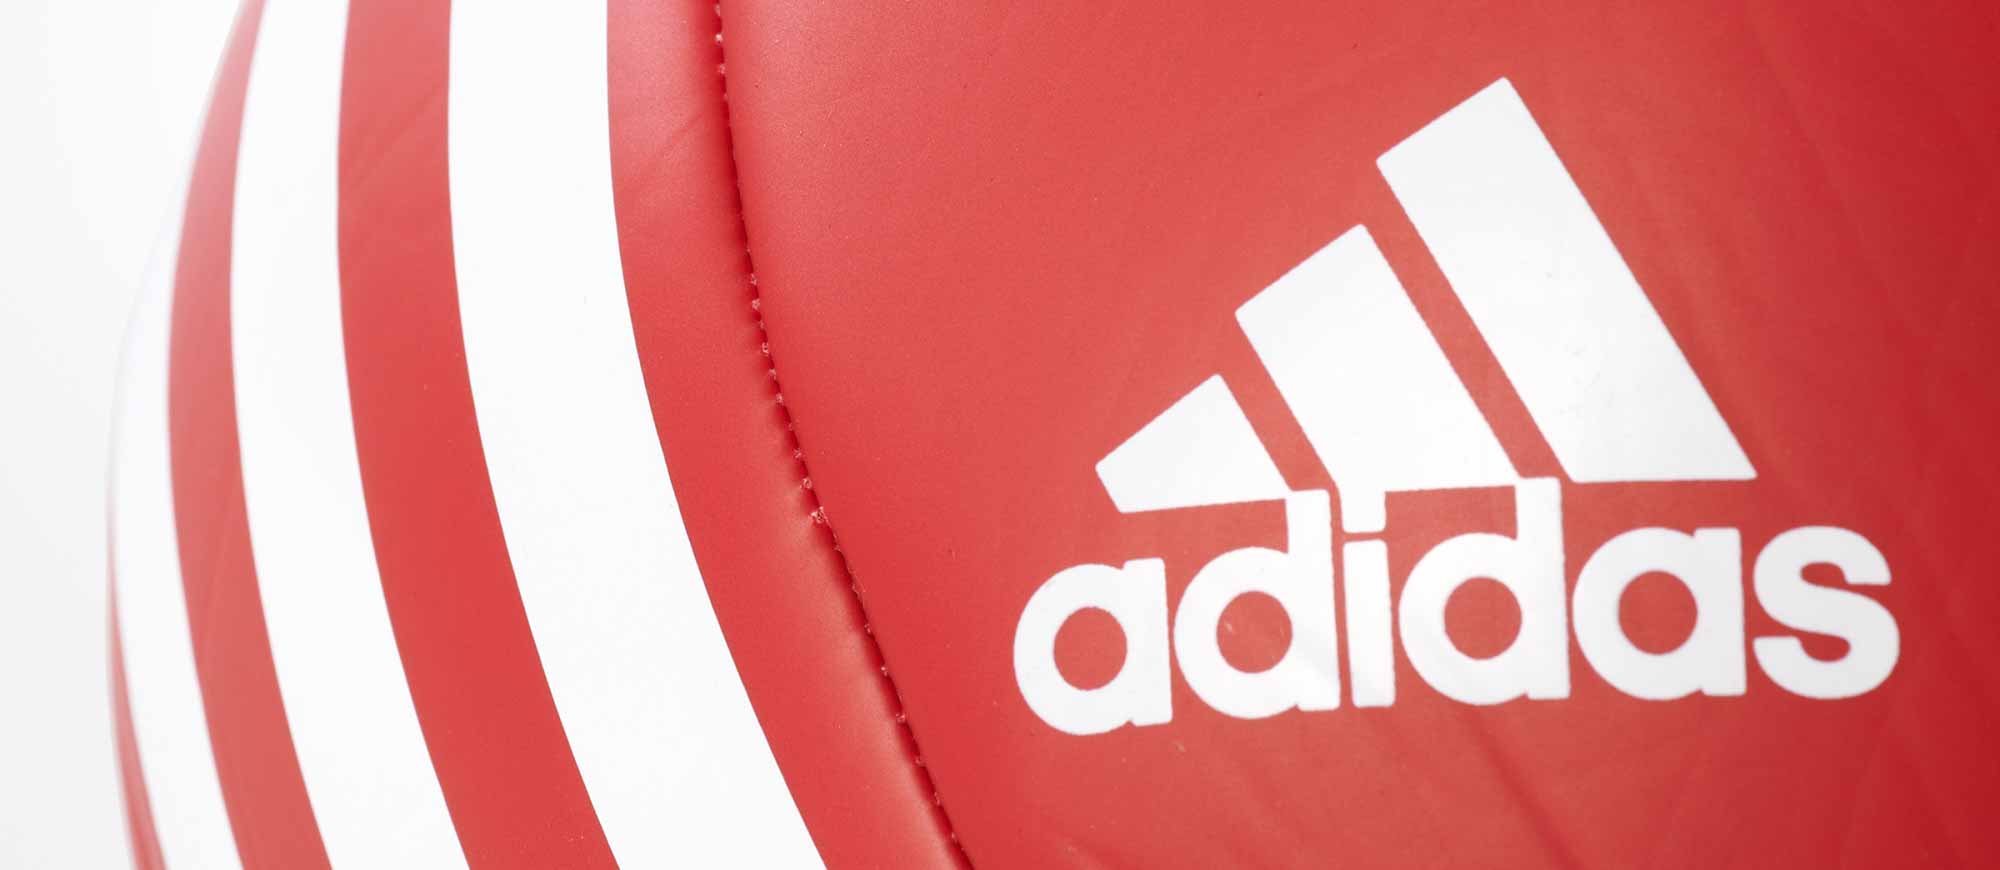 adidas soccer background